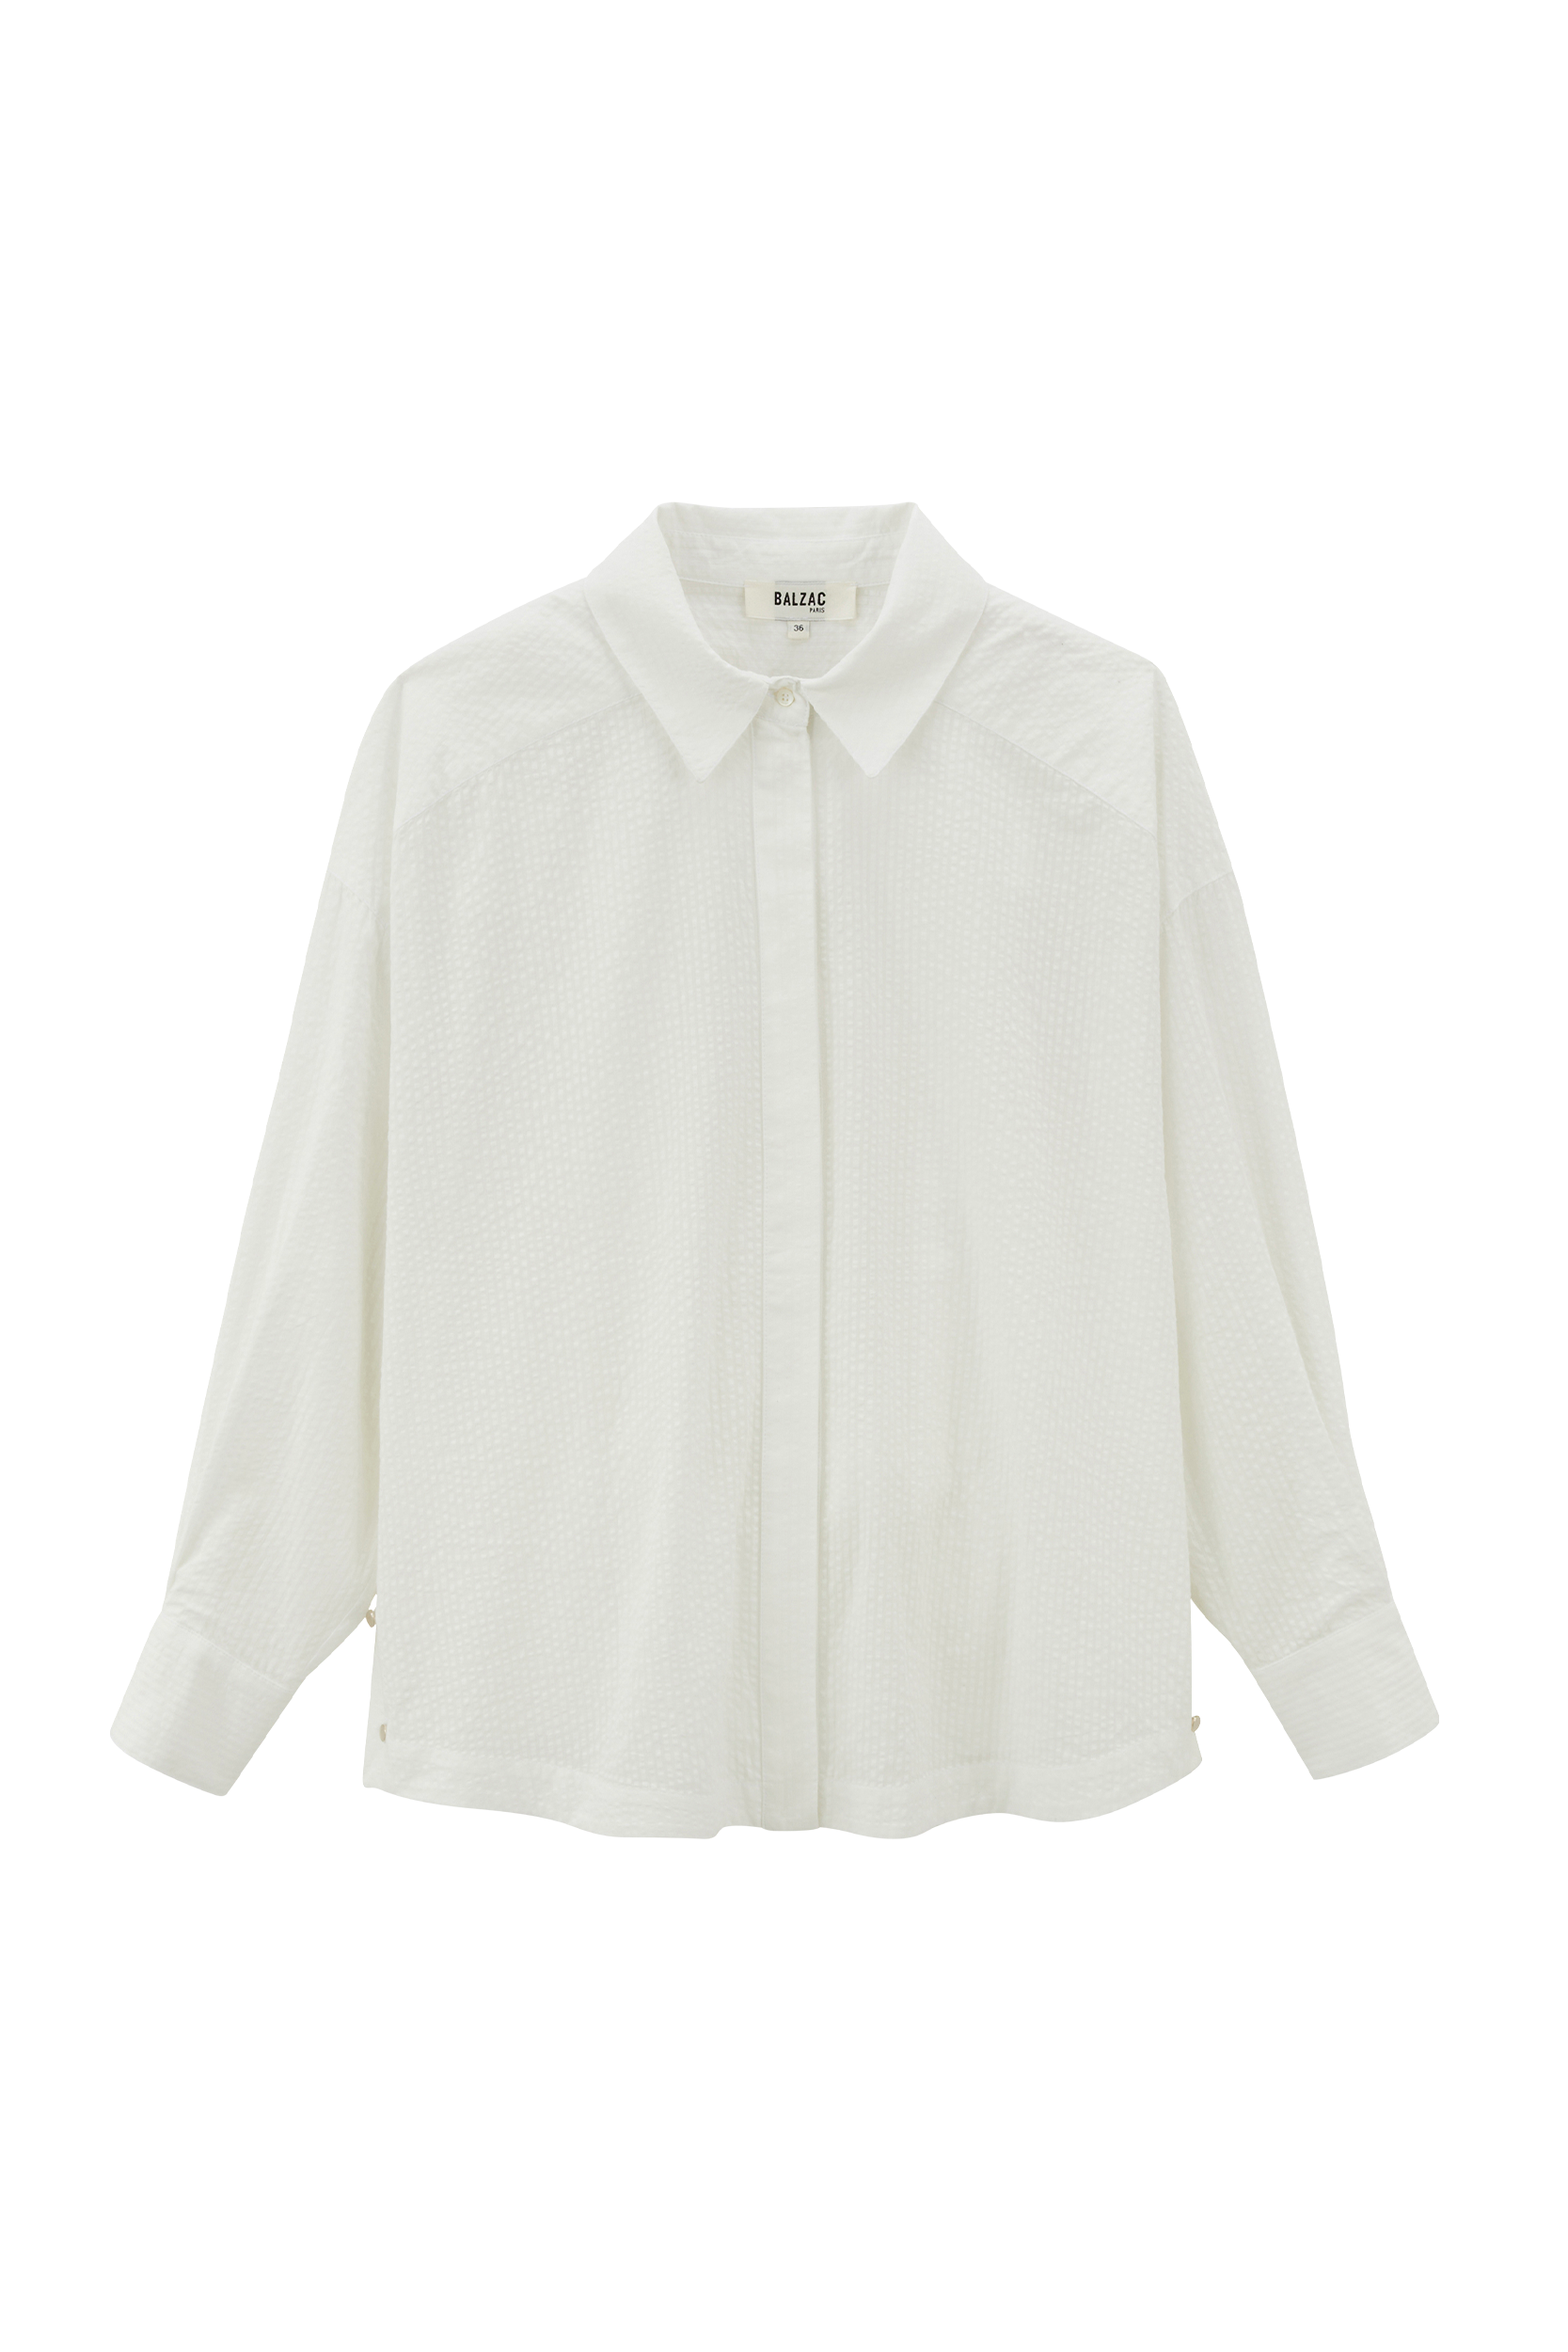 Arthus white seersucker shirt